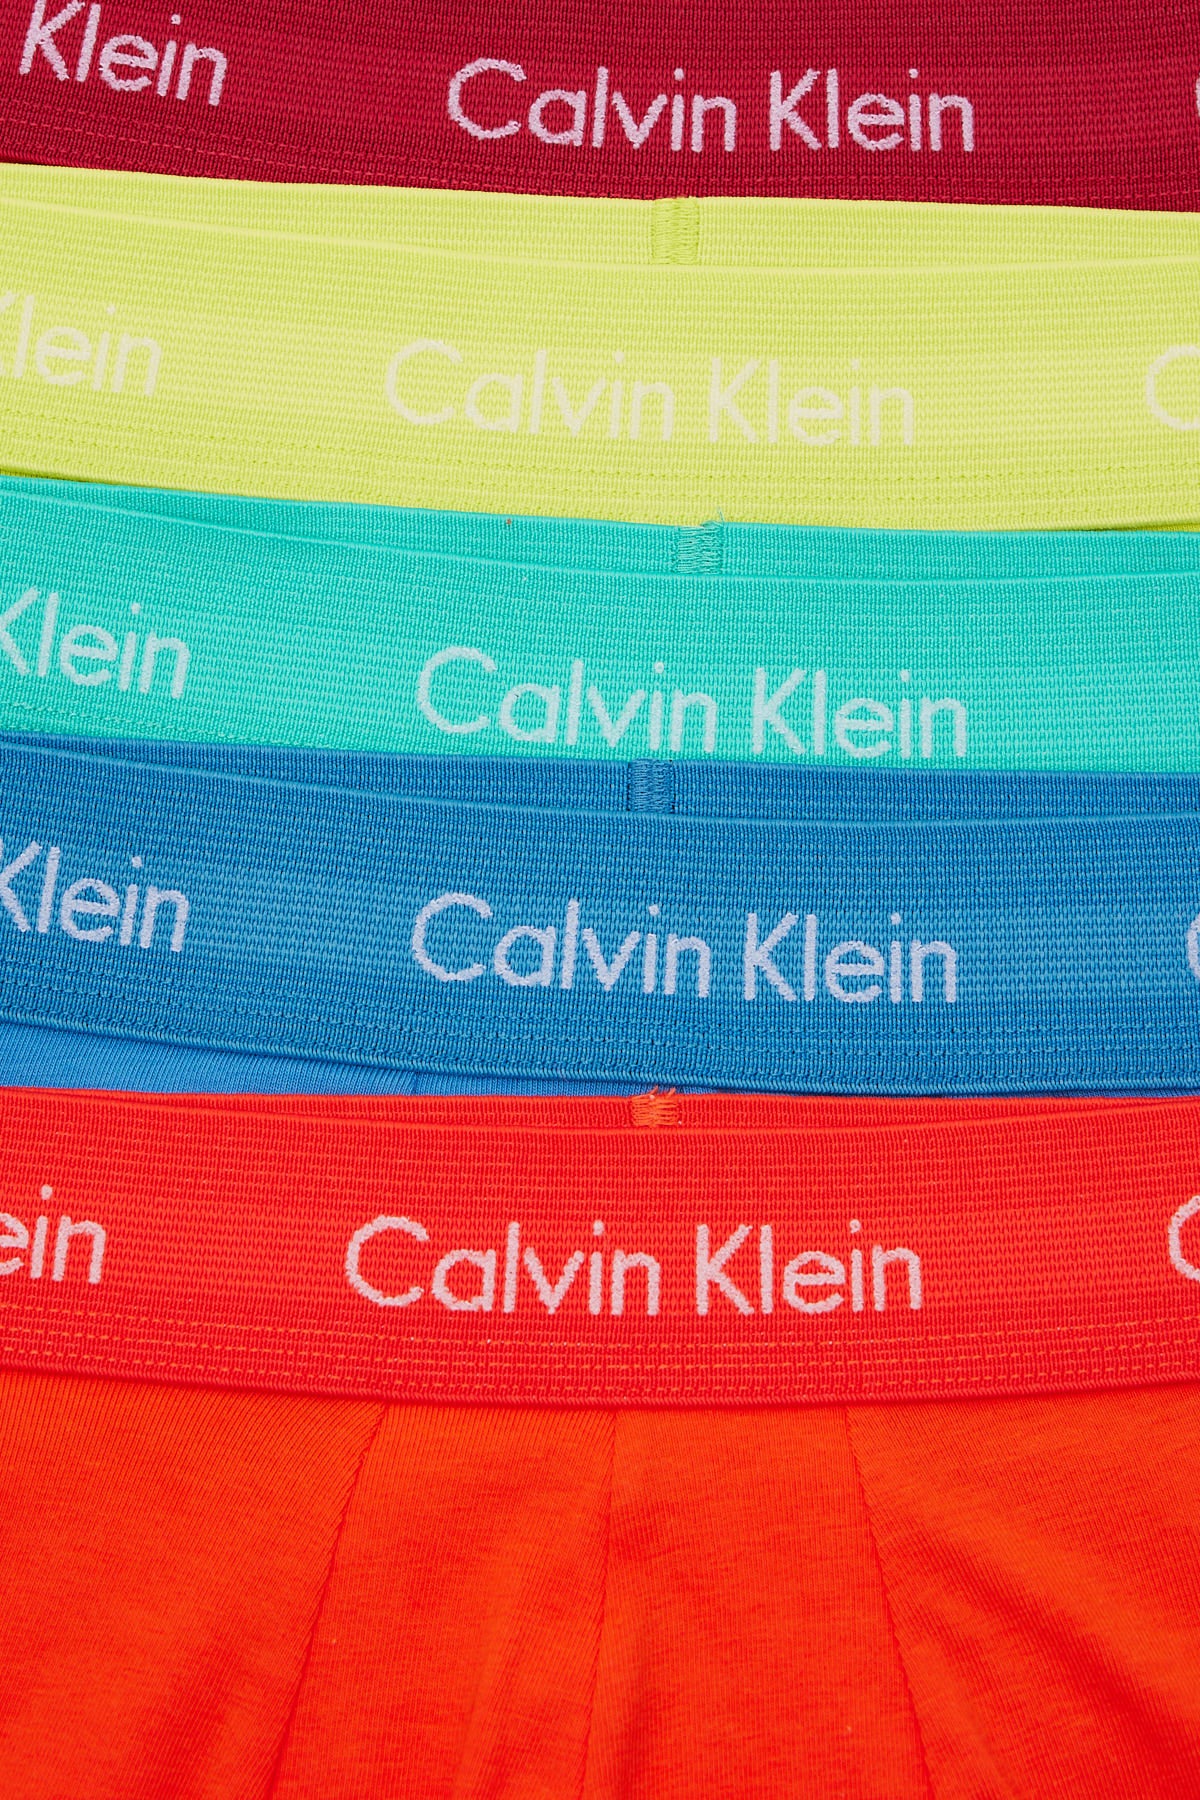 Calvin Klein Cotton Stretch Pride Edit 5Pk Low Rise Trunk Tomato,Red,Lemon Lime,Aqua,Blue